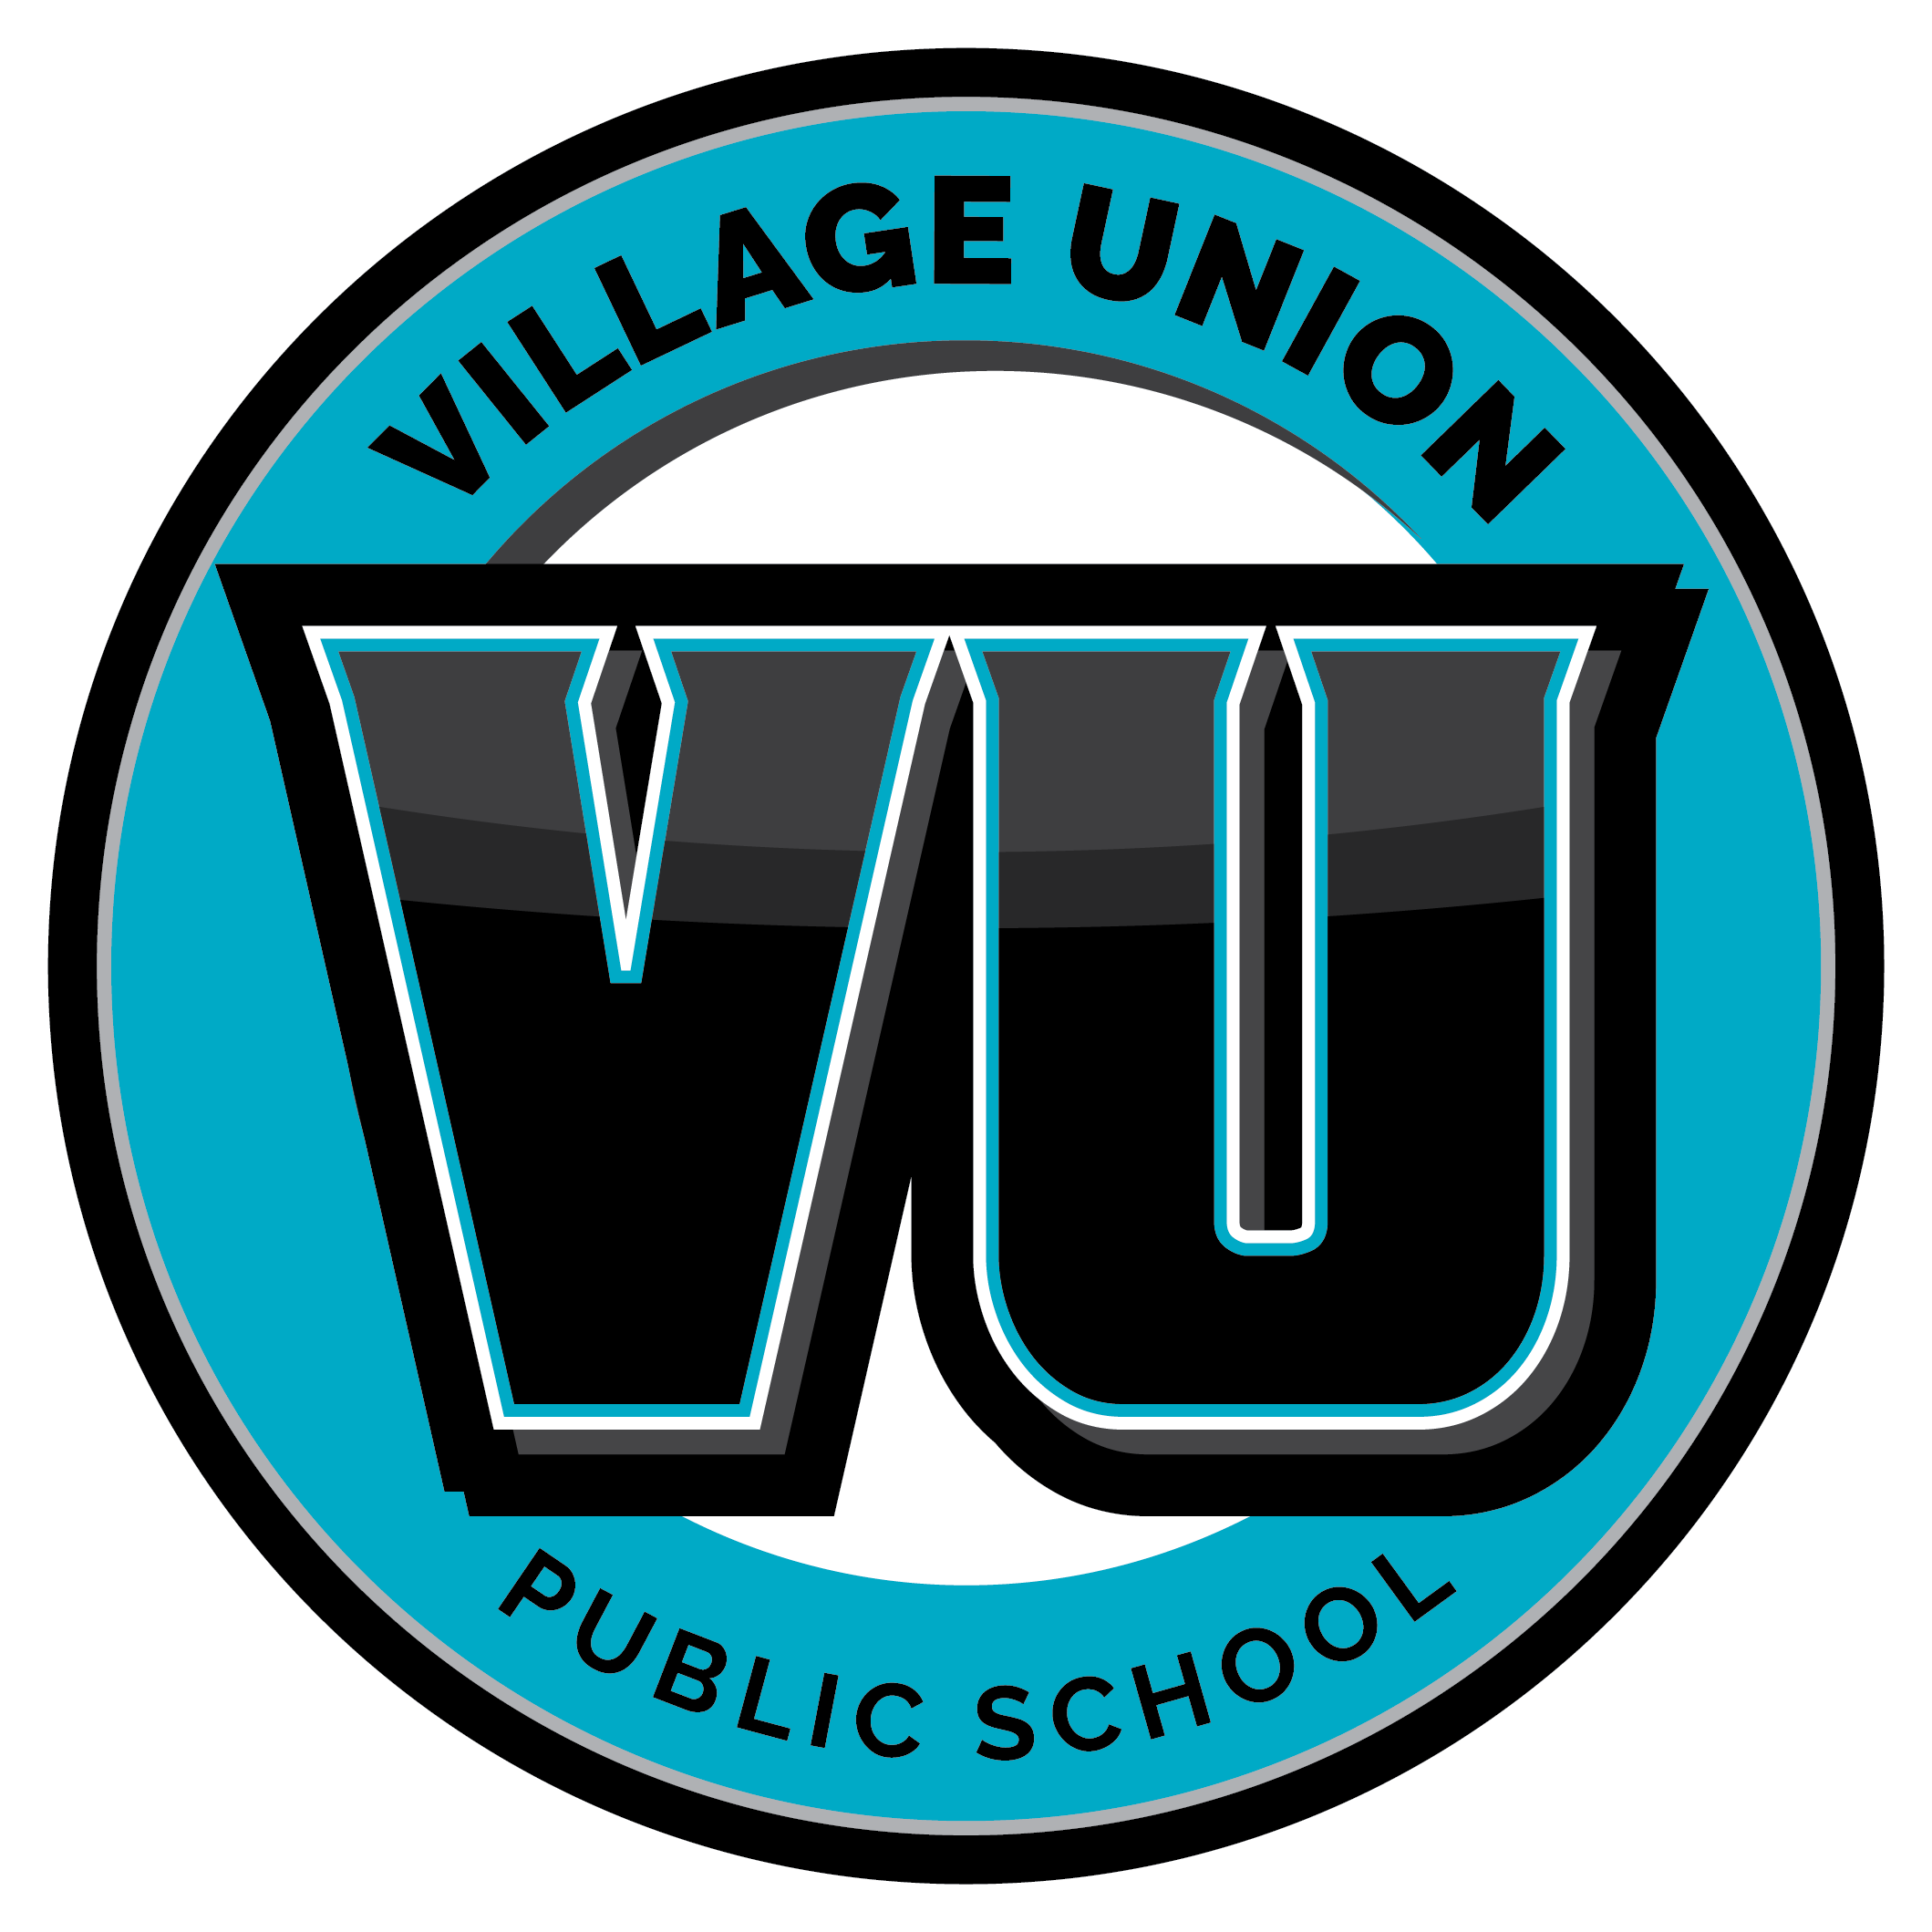 Village Union Public School logo